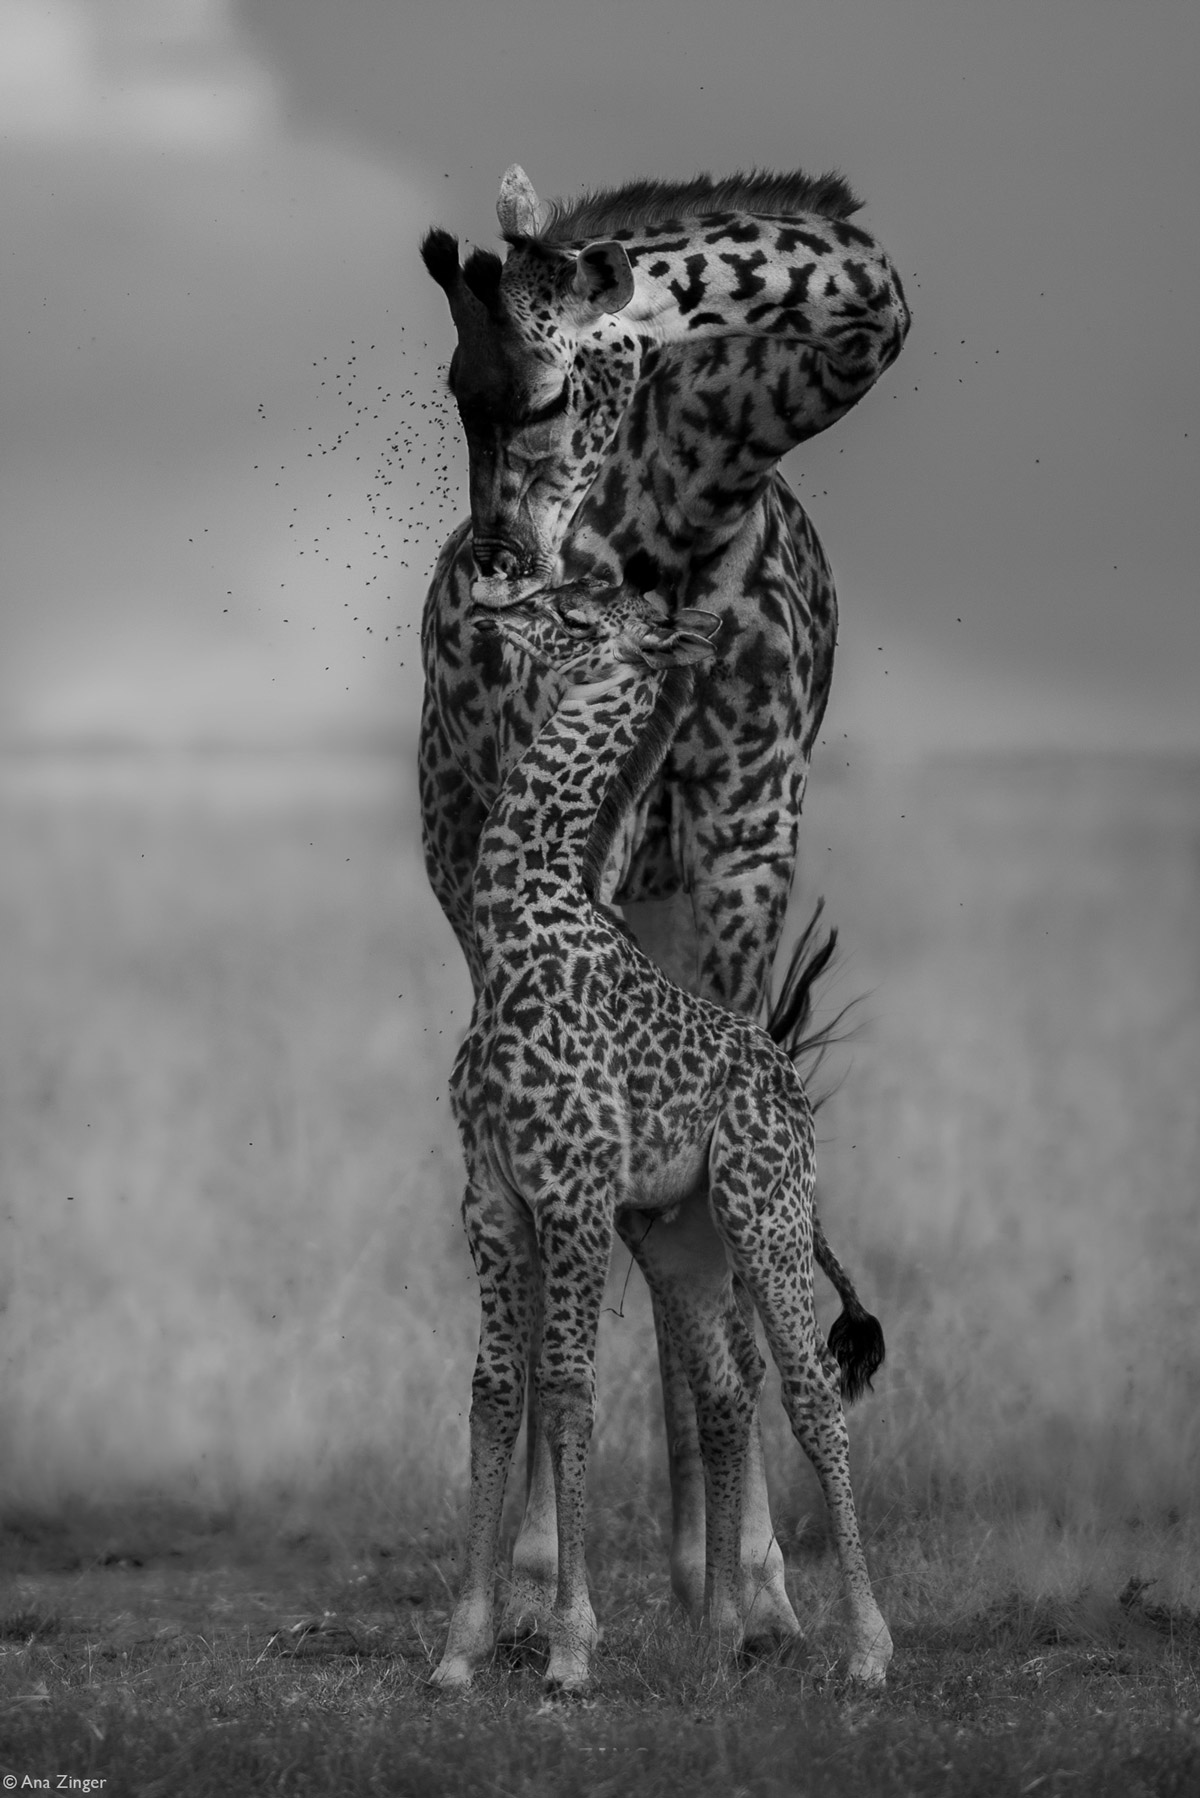 Ana-Zinger-giraffe-Maasai-Mara-Kenya-1.jpg